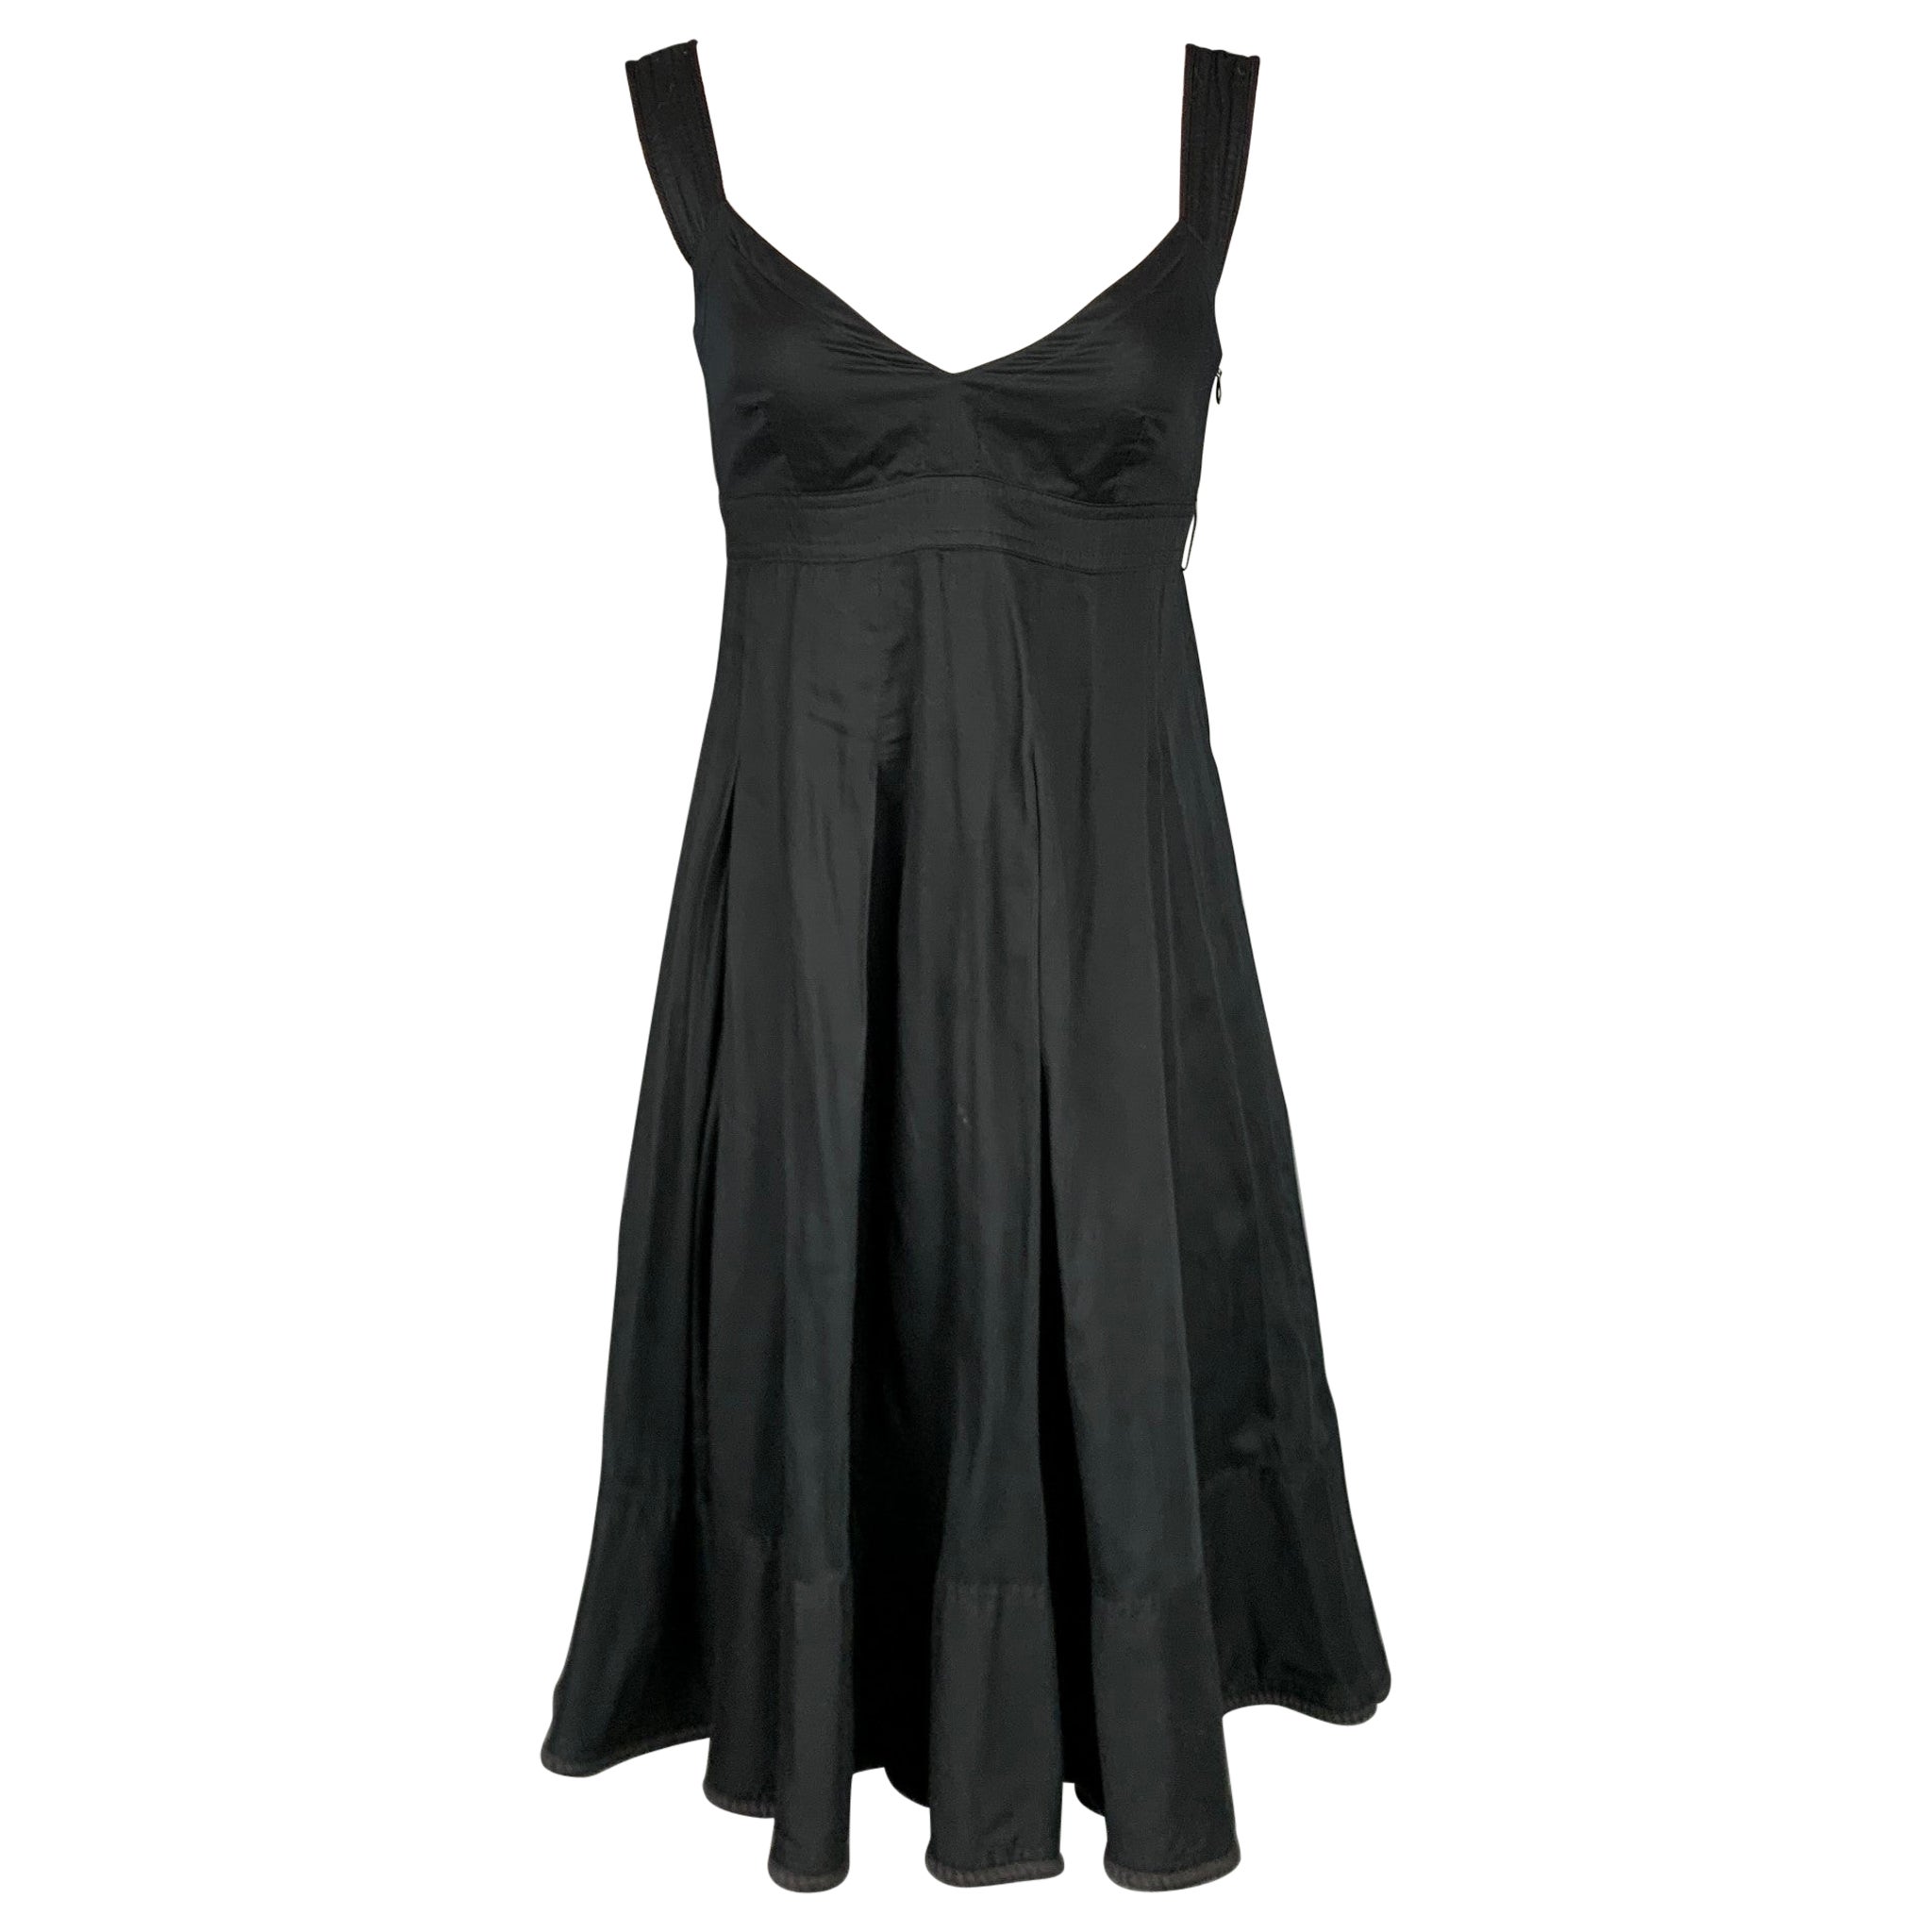 BURBERRY LONDON Size 4 Black Pleated Cotton A-line Dress